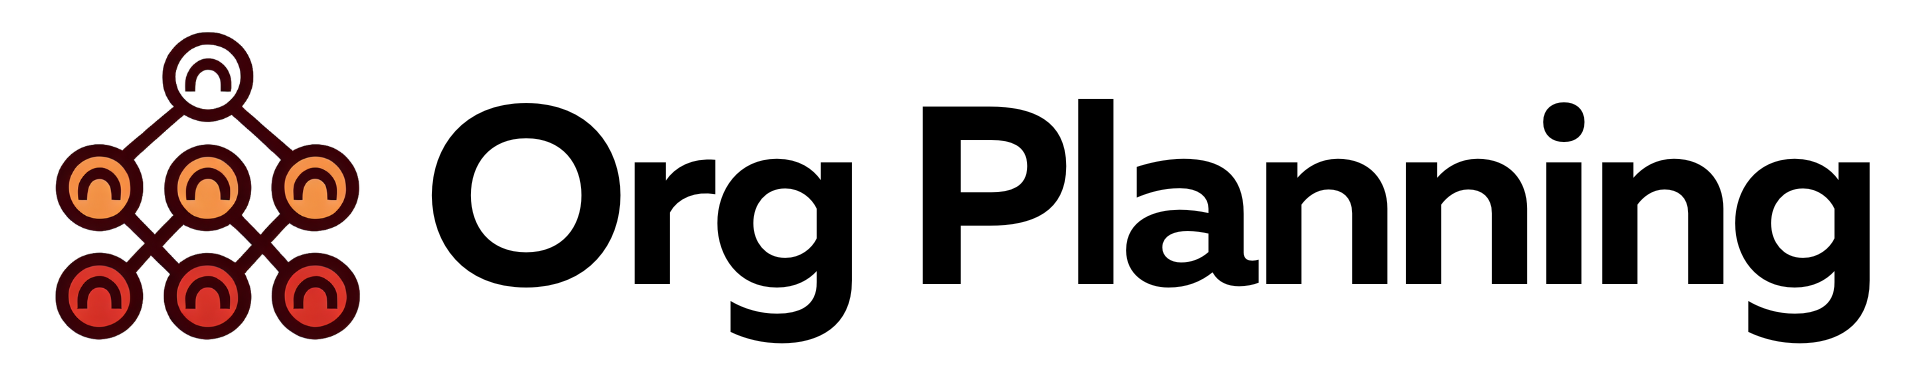 Org planning logo